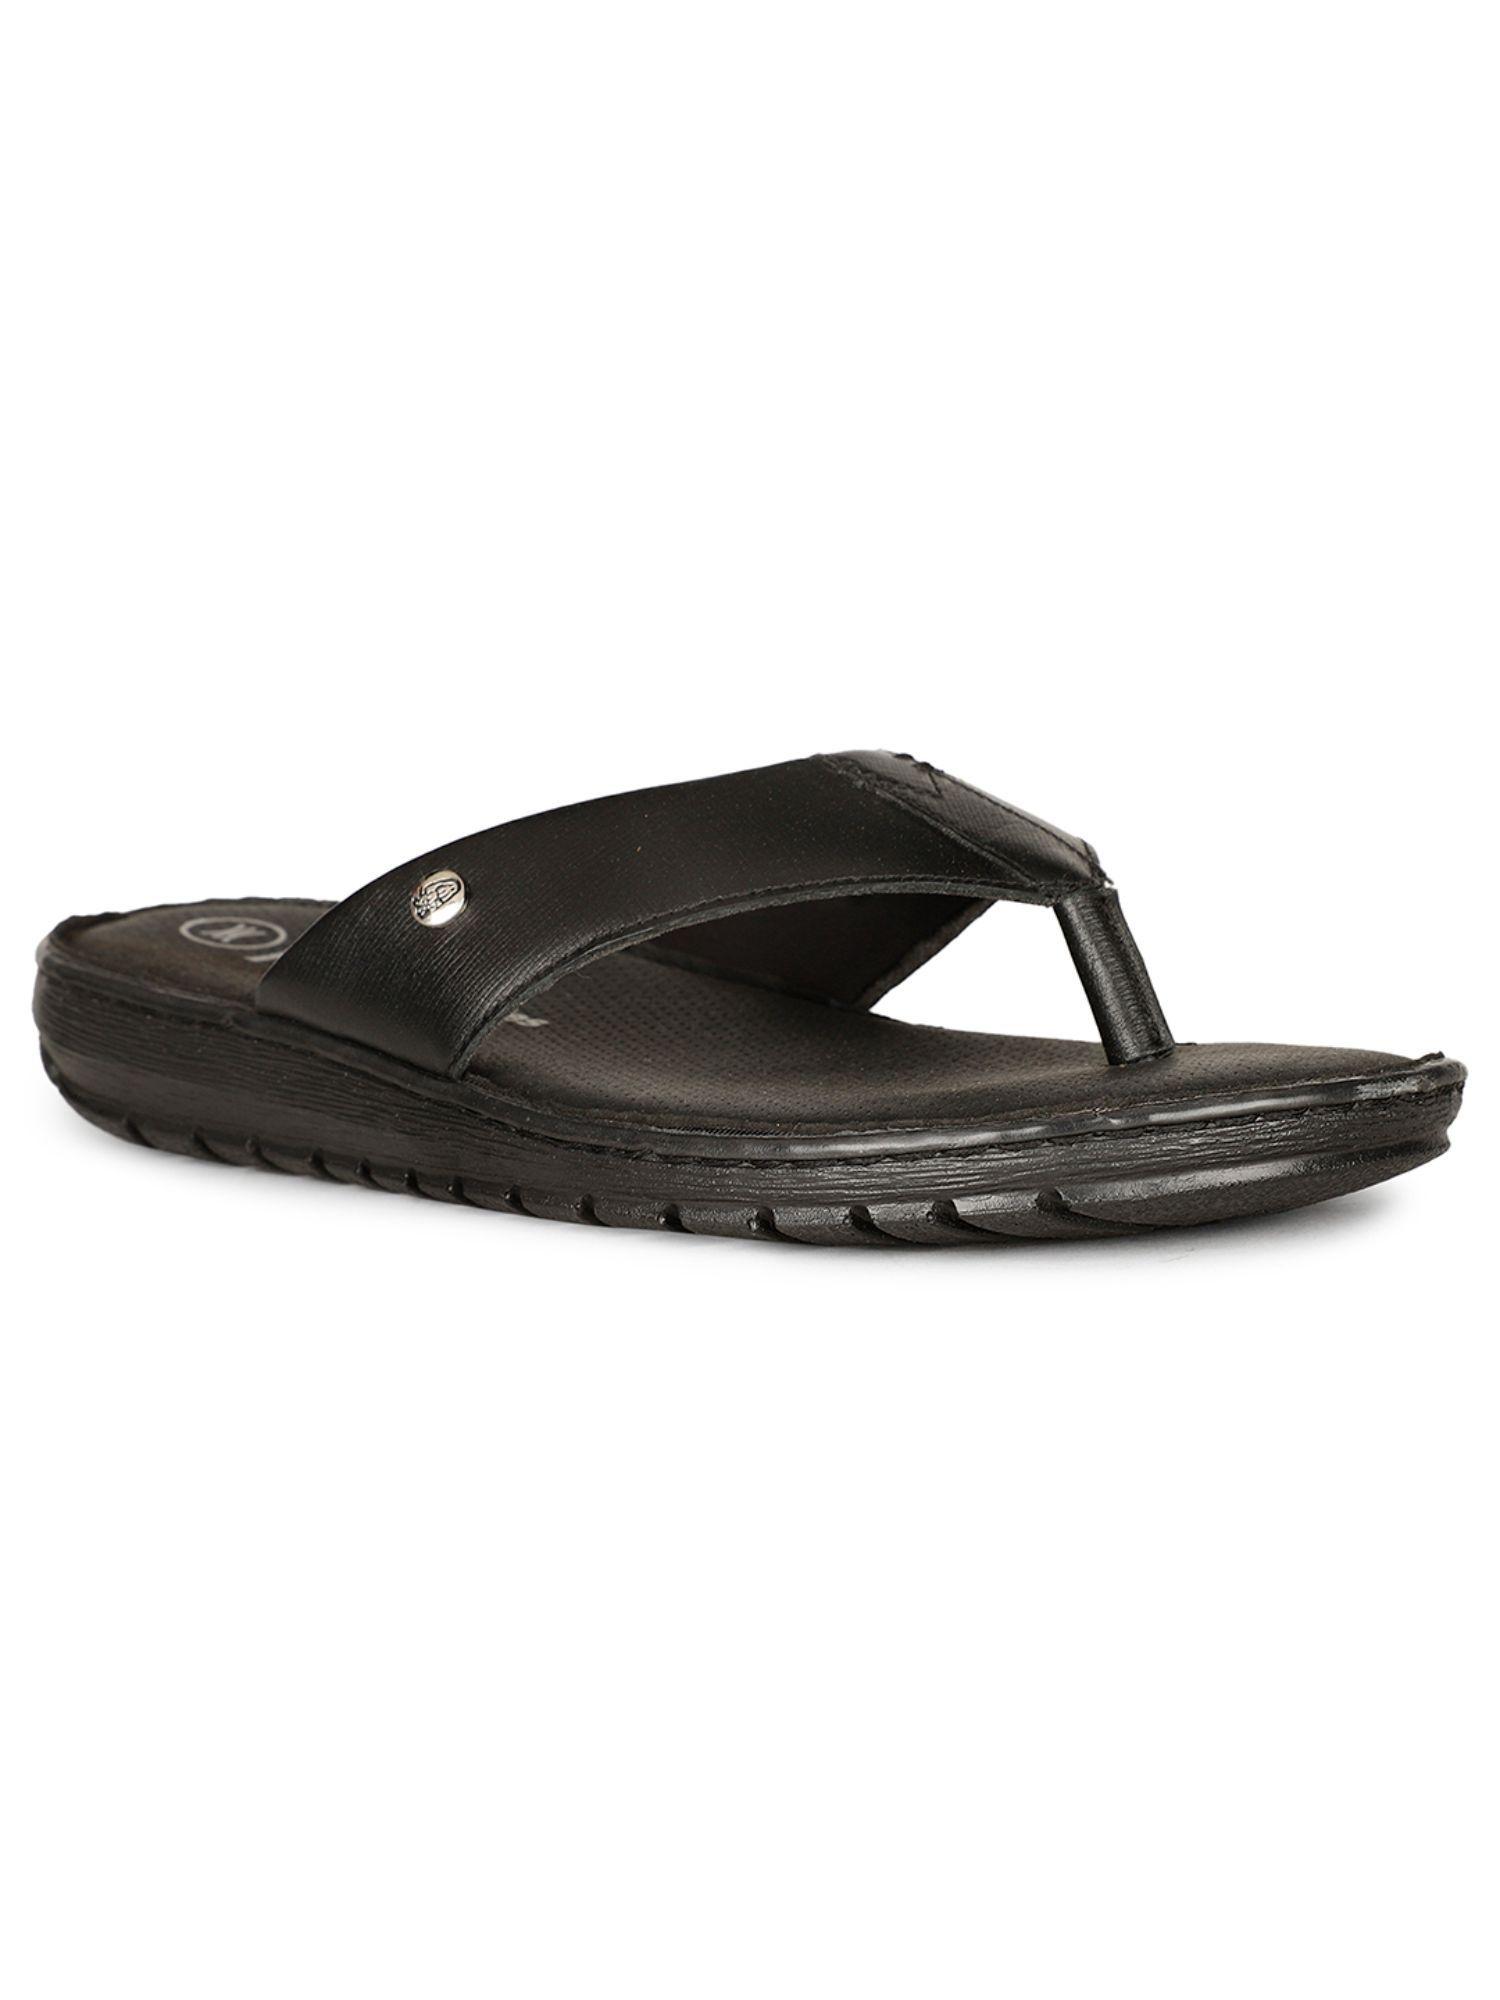 mens-black-slip-on-casual-sandals